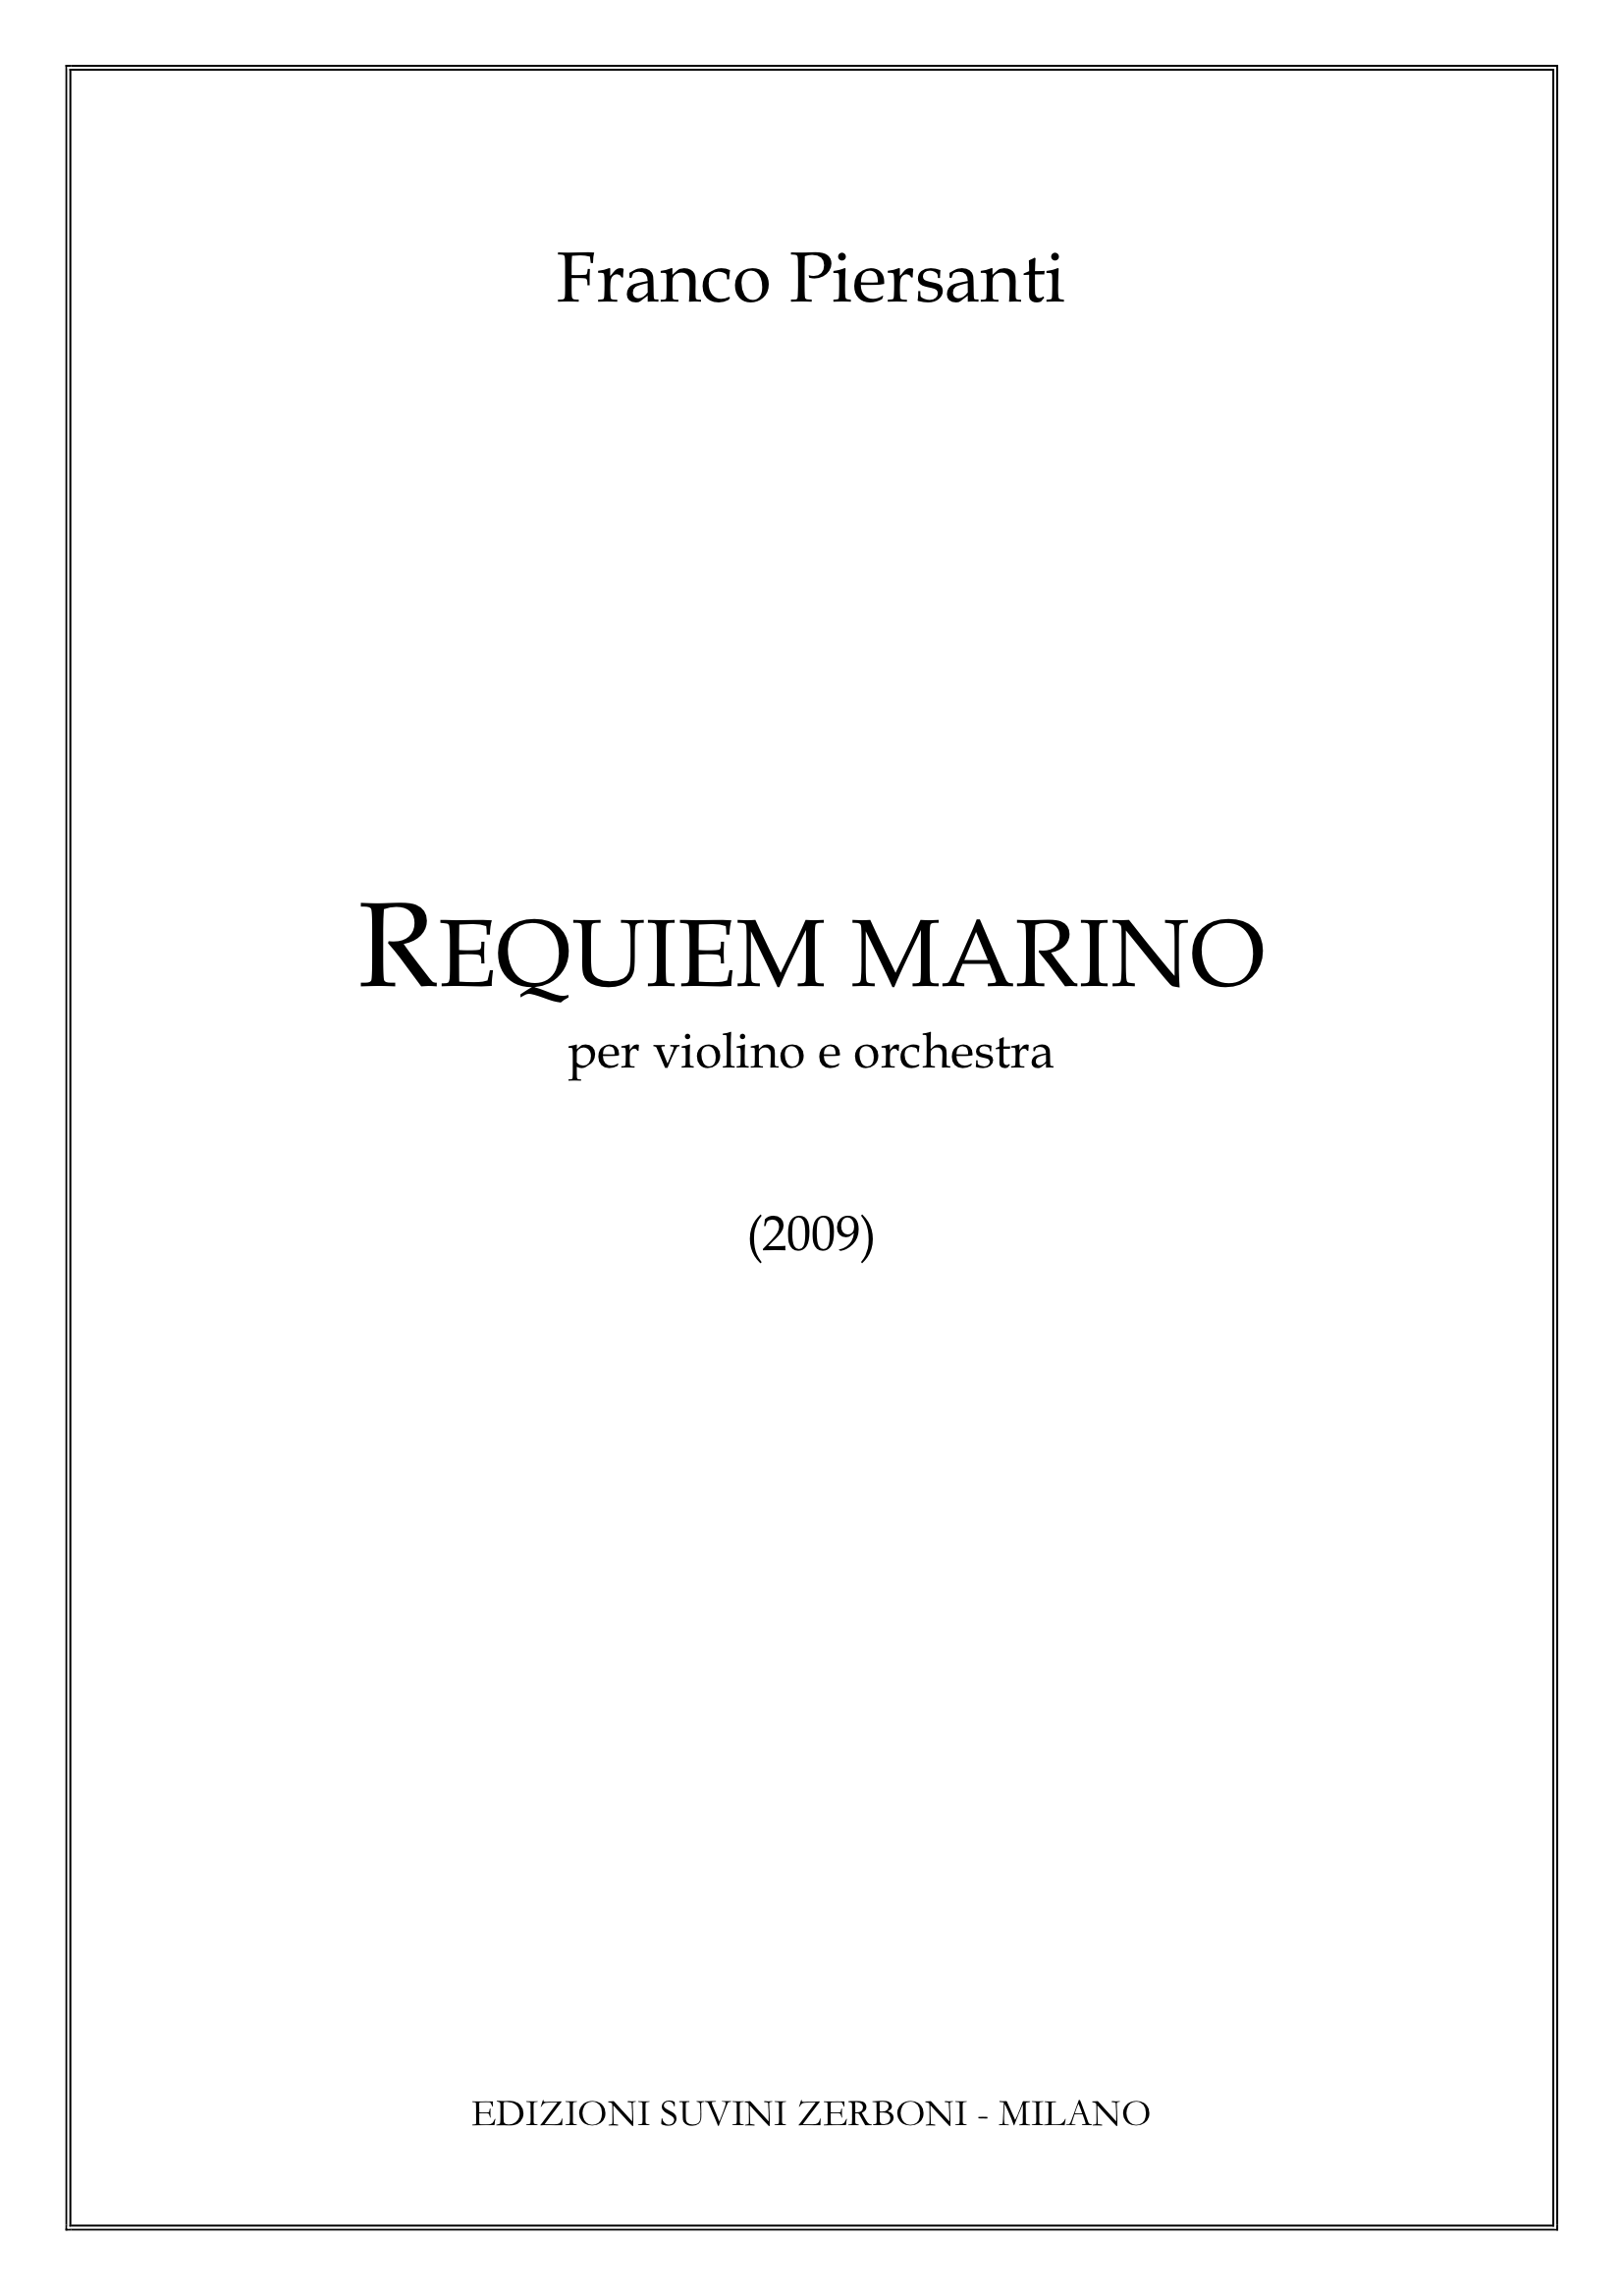 REQUIEM MARINO_Piersanti 1 01